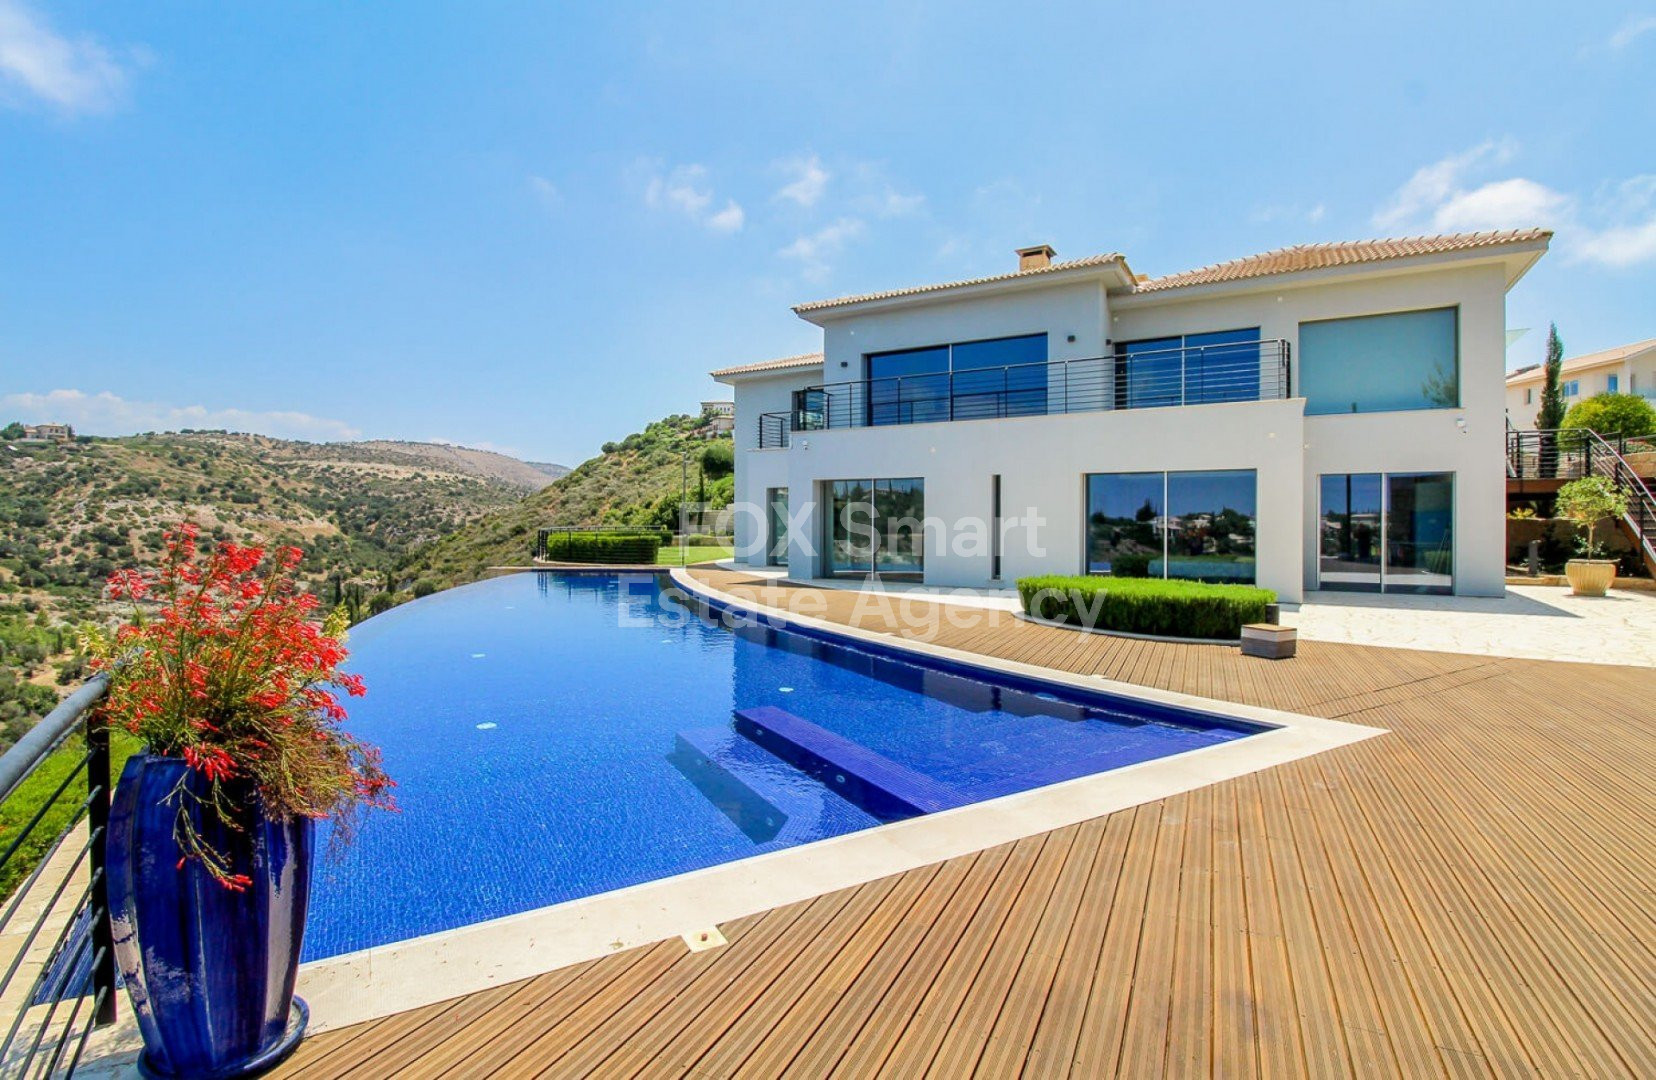 House, For Sale, Paphos  4 Bedrooms 4 Bathrooms 3130.00 SqMt.....